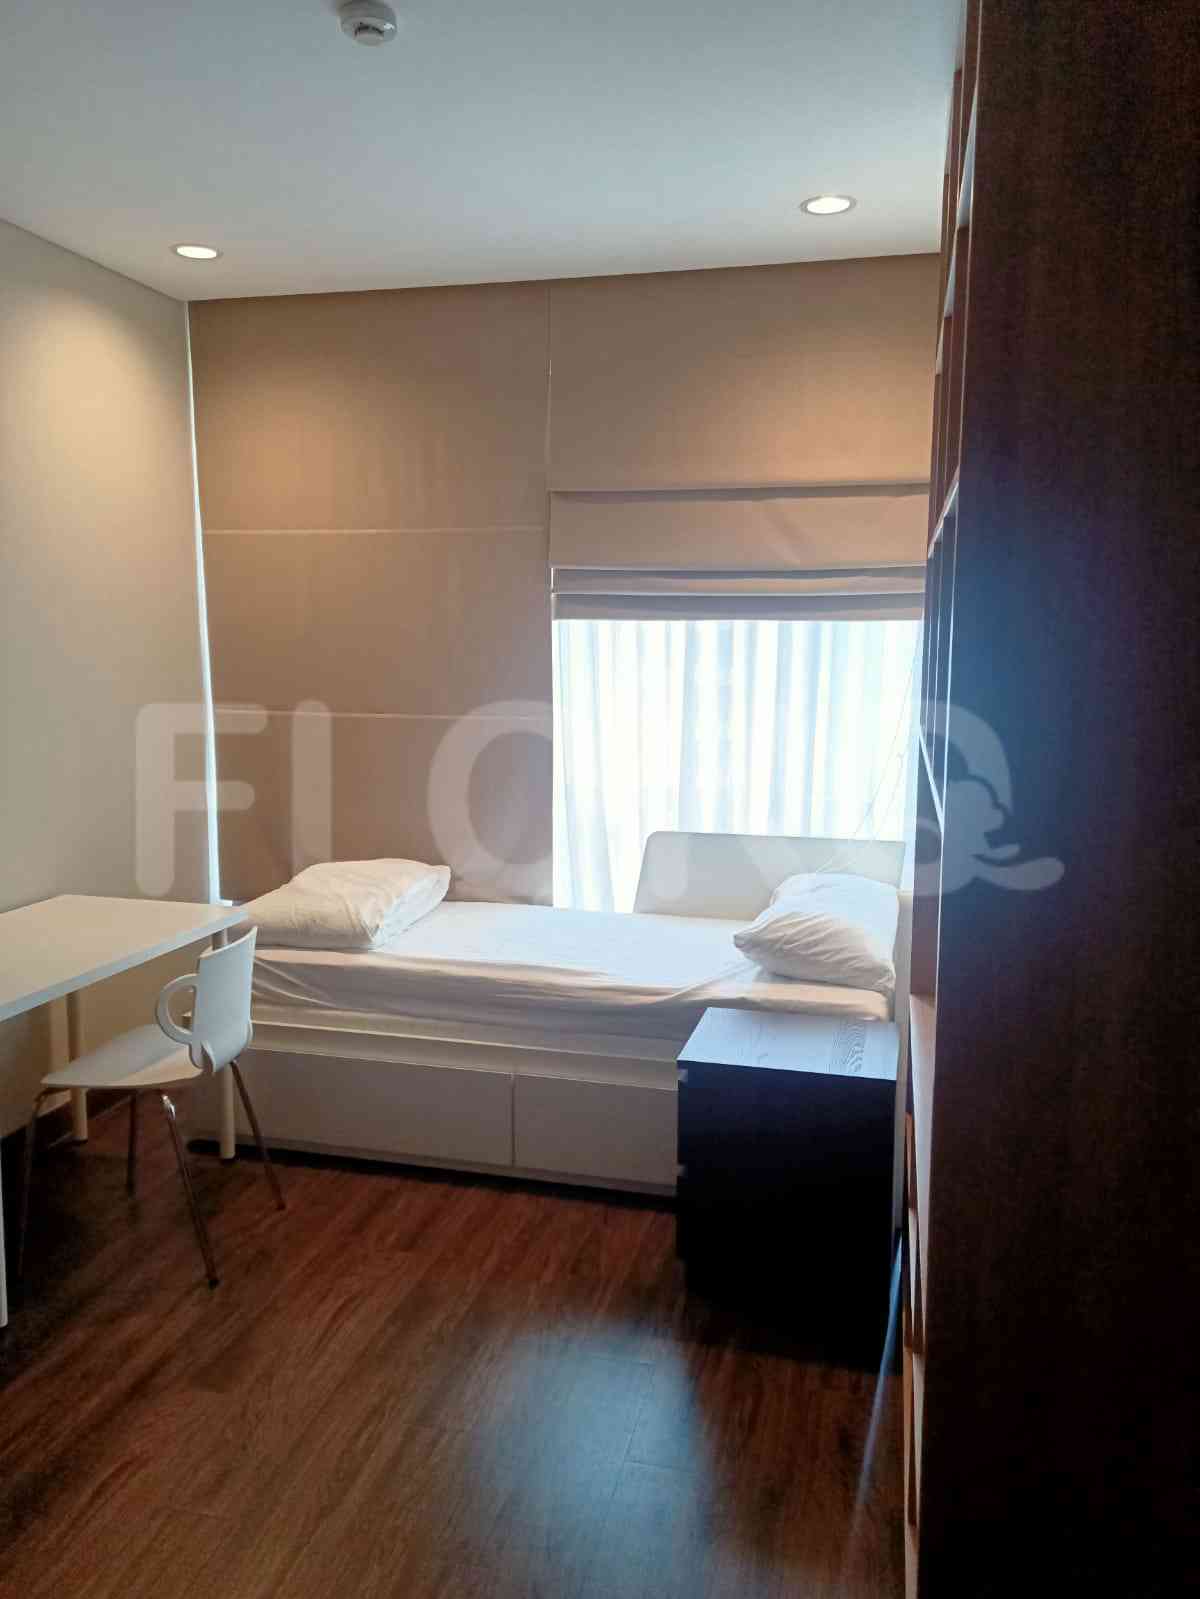 3 Bedroom on 7th Floor for Rent in Apartemen Branz Simatupang - ftb893 4